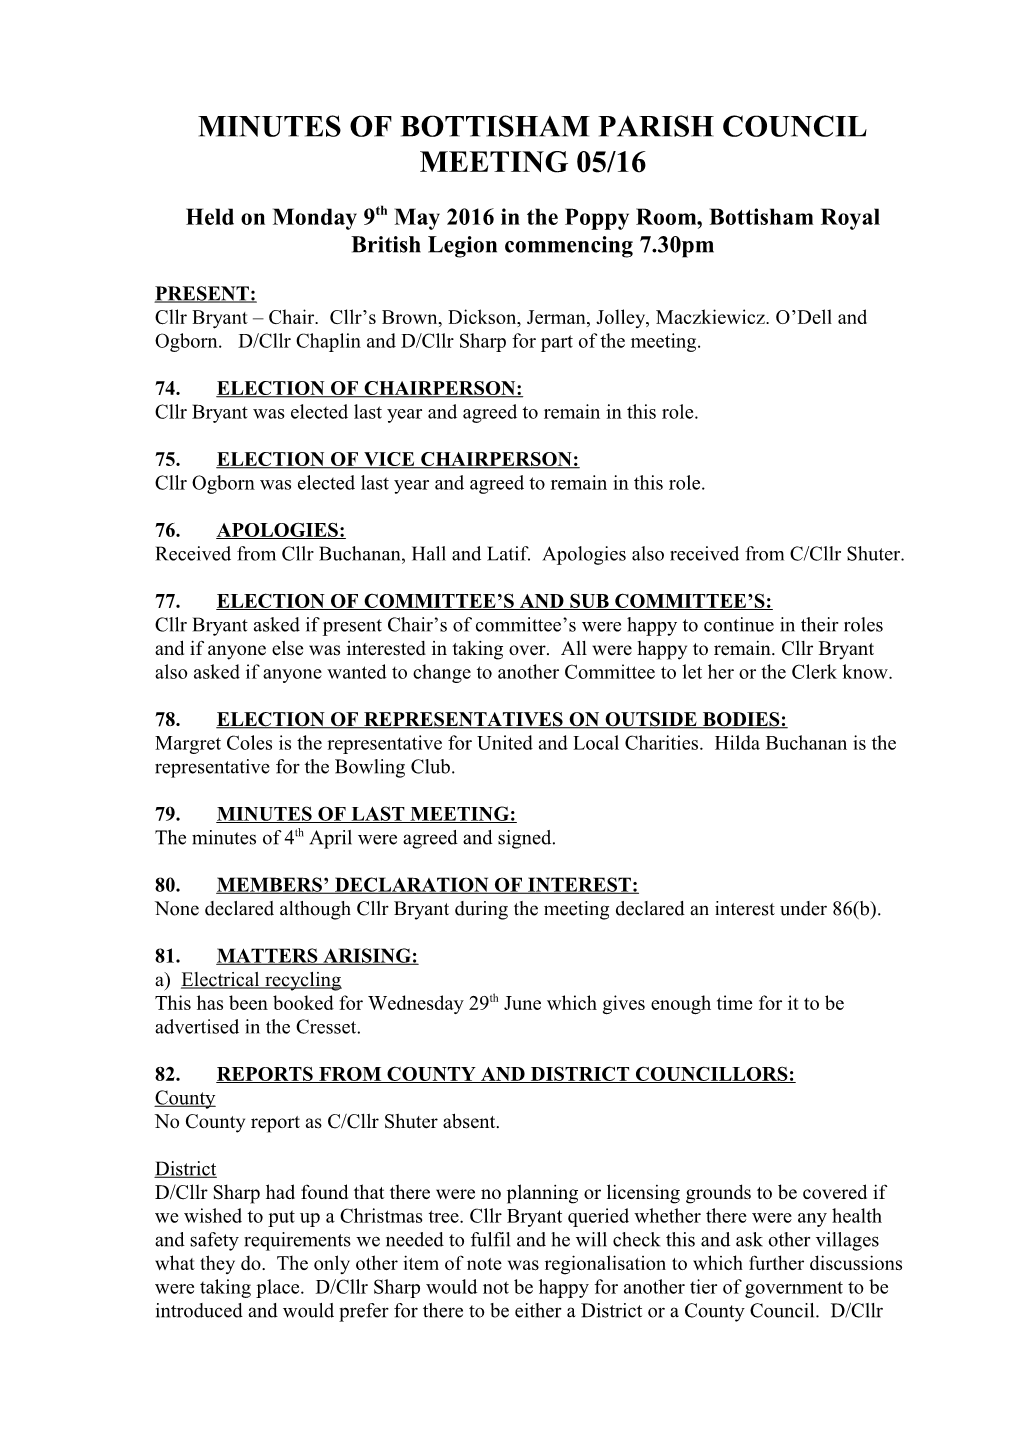 Minutes of Bottisham Parish Council Meeting 05/16